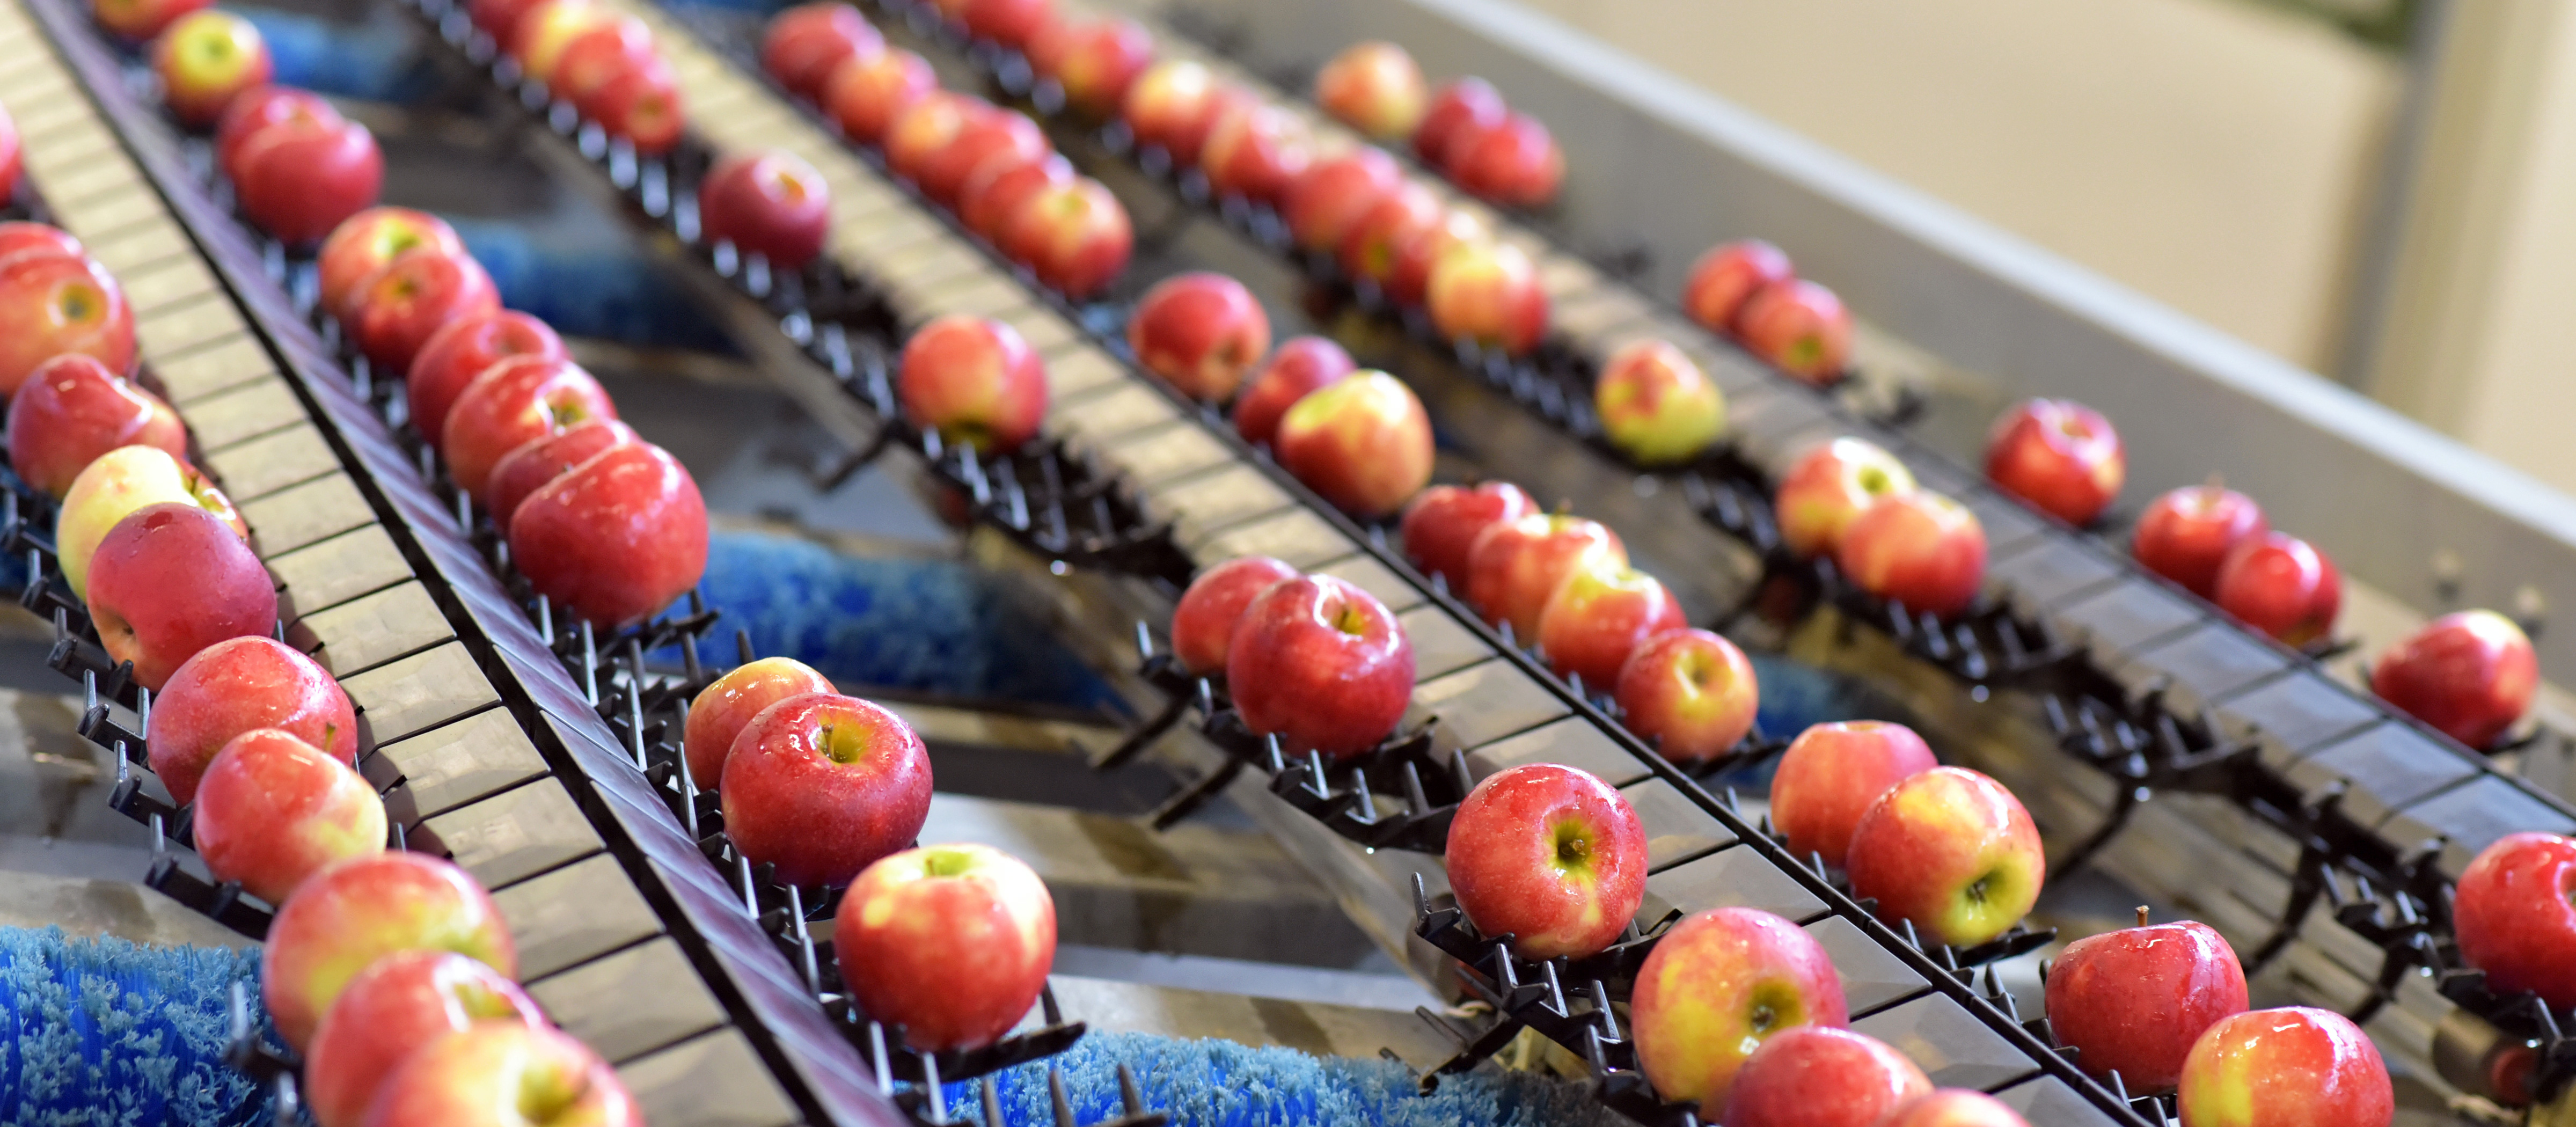 Apples on a conveyer belt